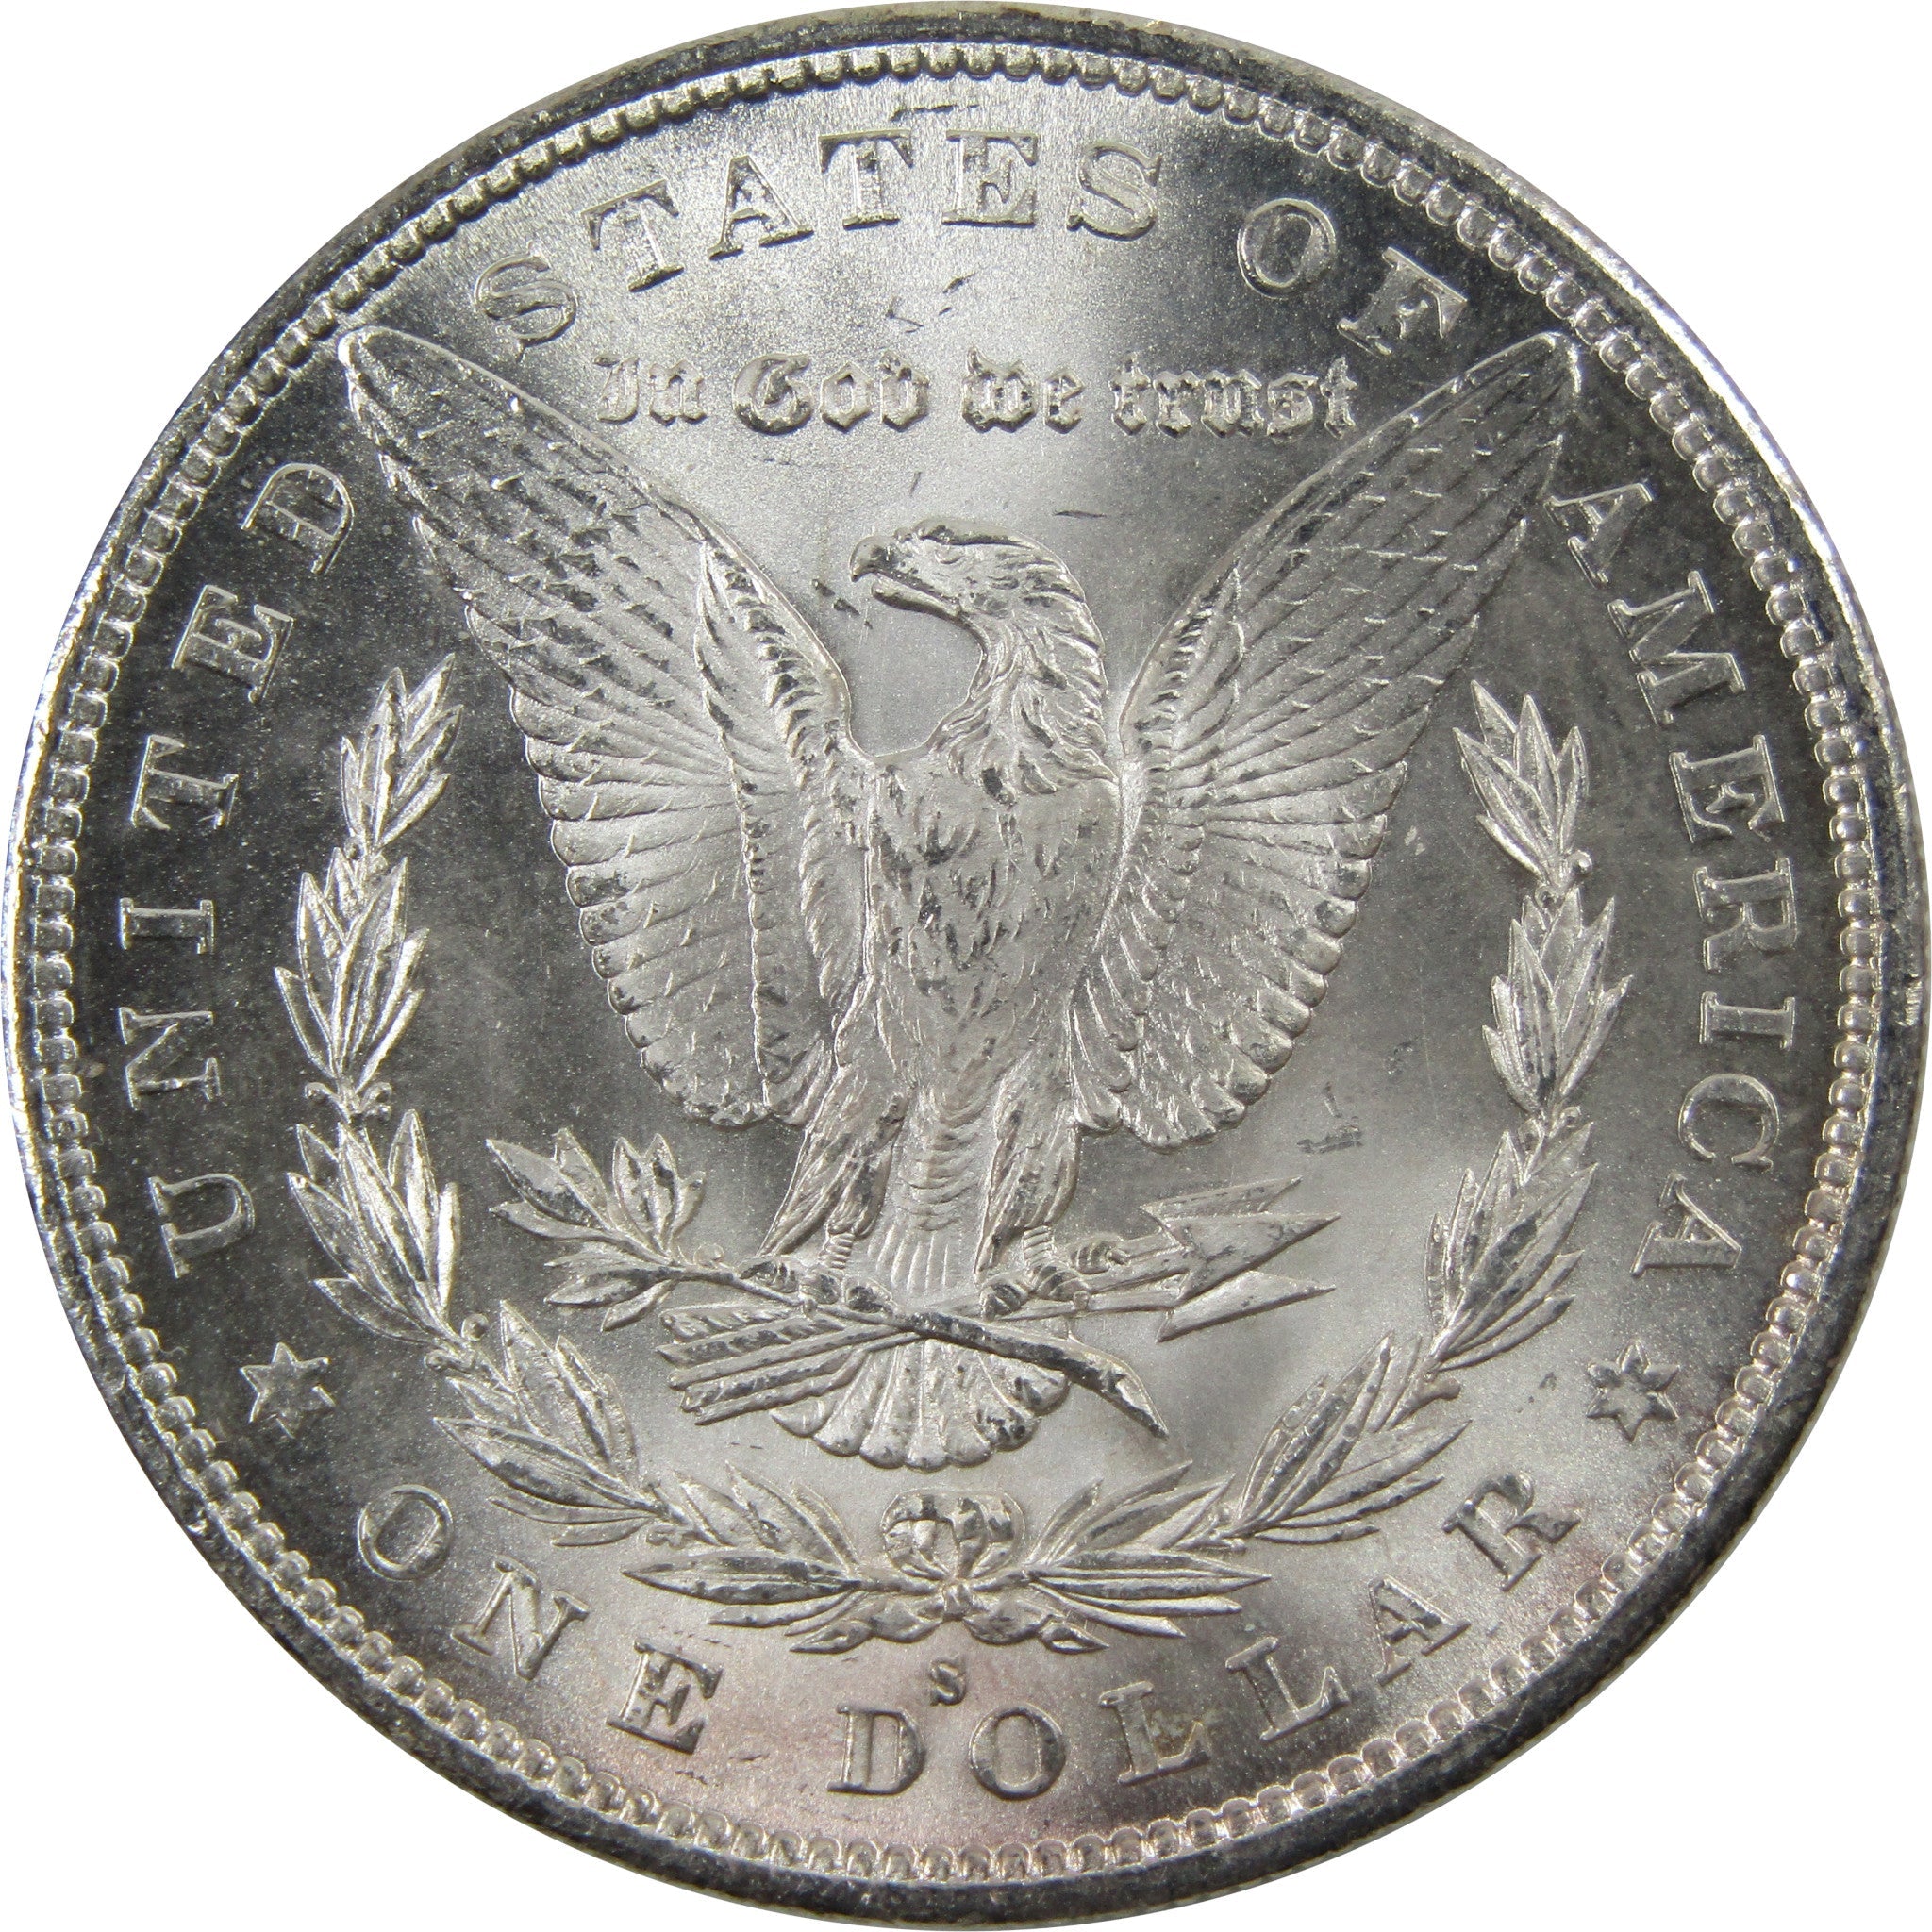 1879 S Morgan Dollar BU Uncirculated 90% Silver $1 SKU:I5444 - Morgan coin - Morgan silver dollar - Morgan silver dollar for sale - Profile Coins &amp; Collectibles